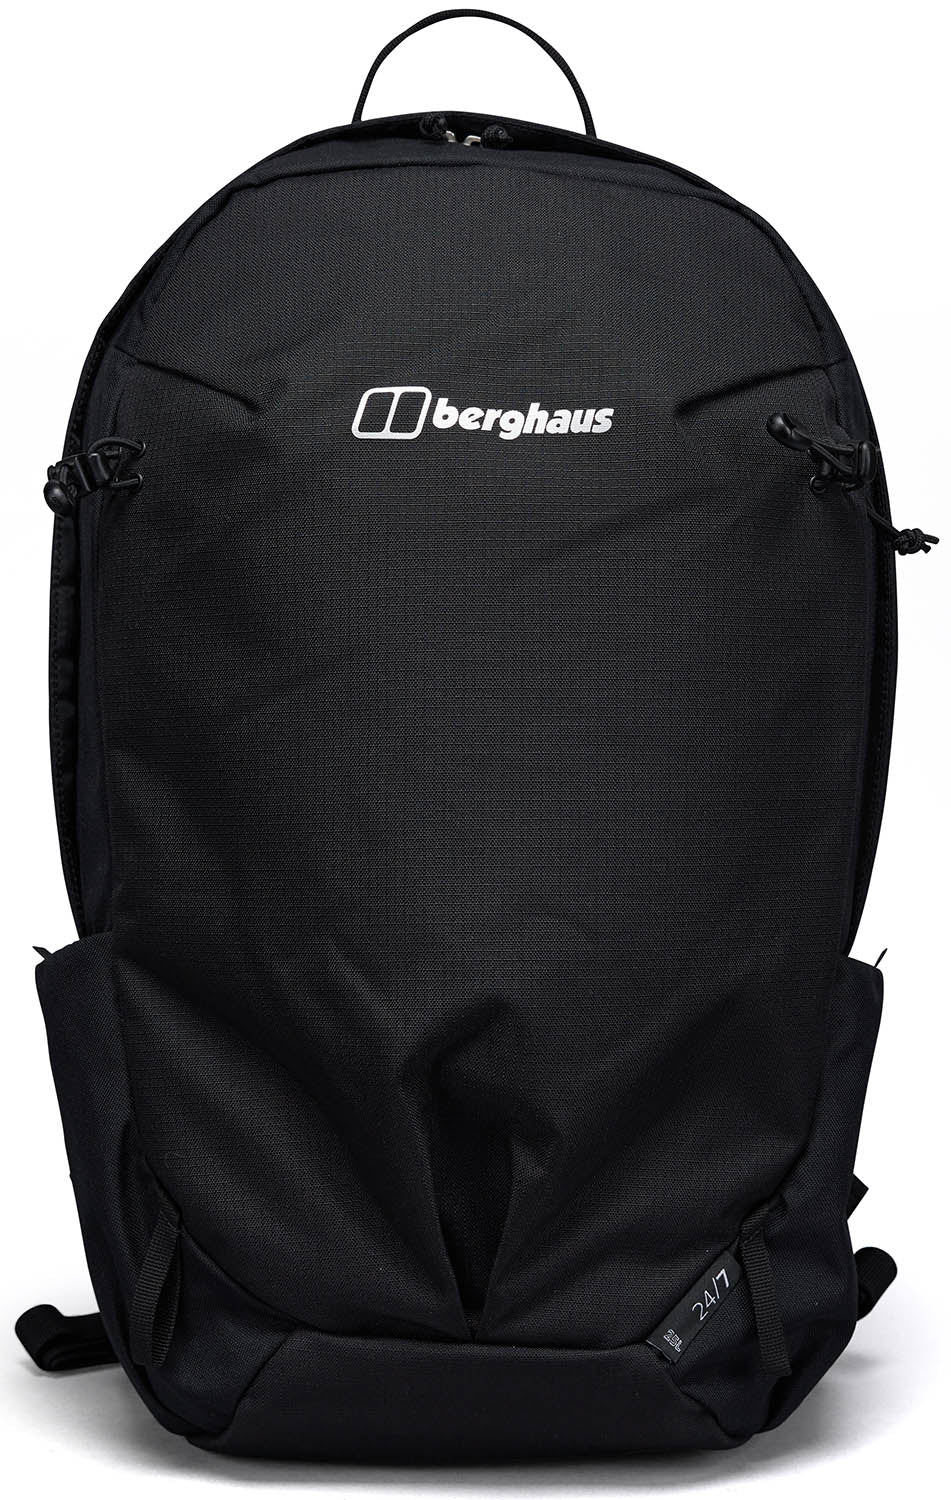 Berghaus 24/7 25 Backpack - Black